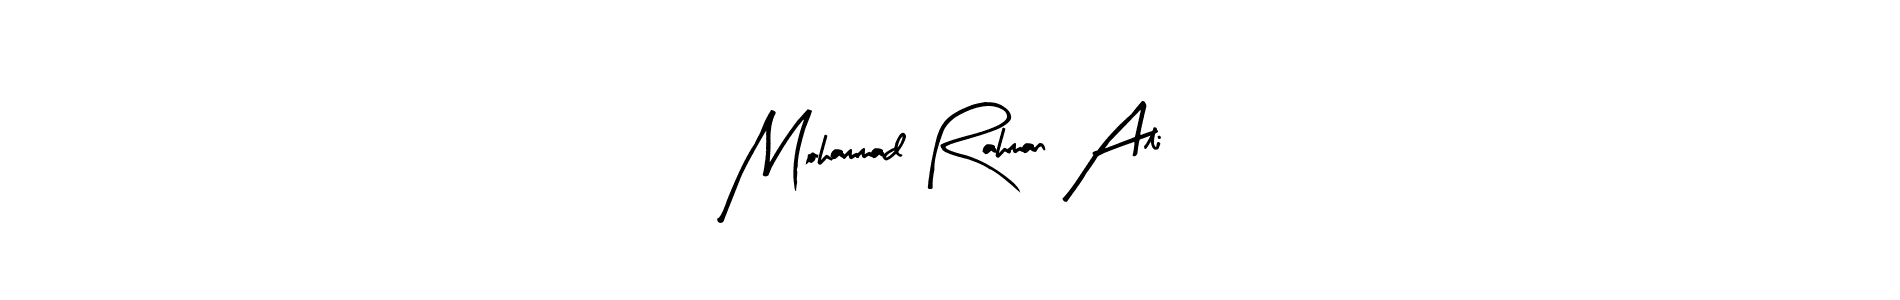 How to Draw Mohammad Rahman Ali signature style? Arty Signature is a latest design signature styles for name Mohammad Rahman Ali. Mohammad Rahman Ali signature style 8 images and pictures png